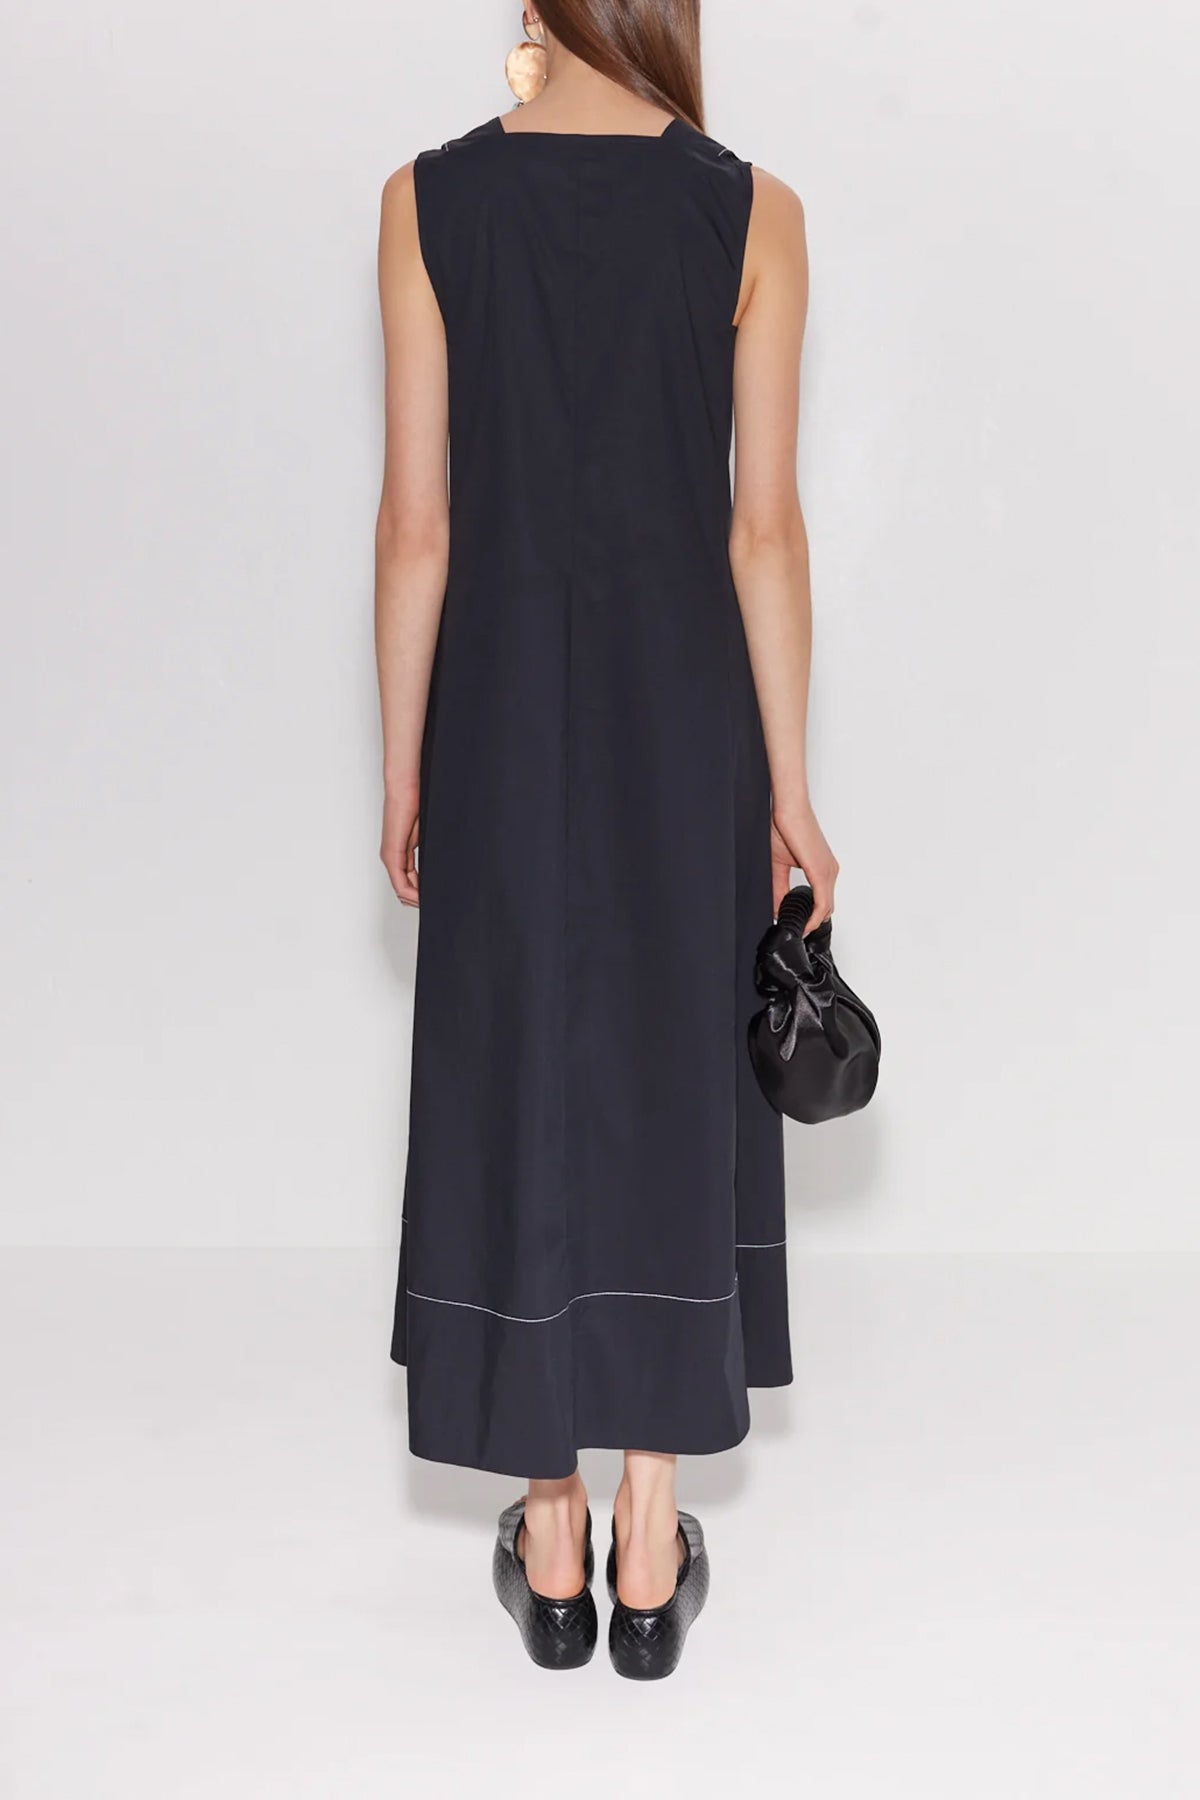 Mar Poplin Dress in Black - shop - olivia.com